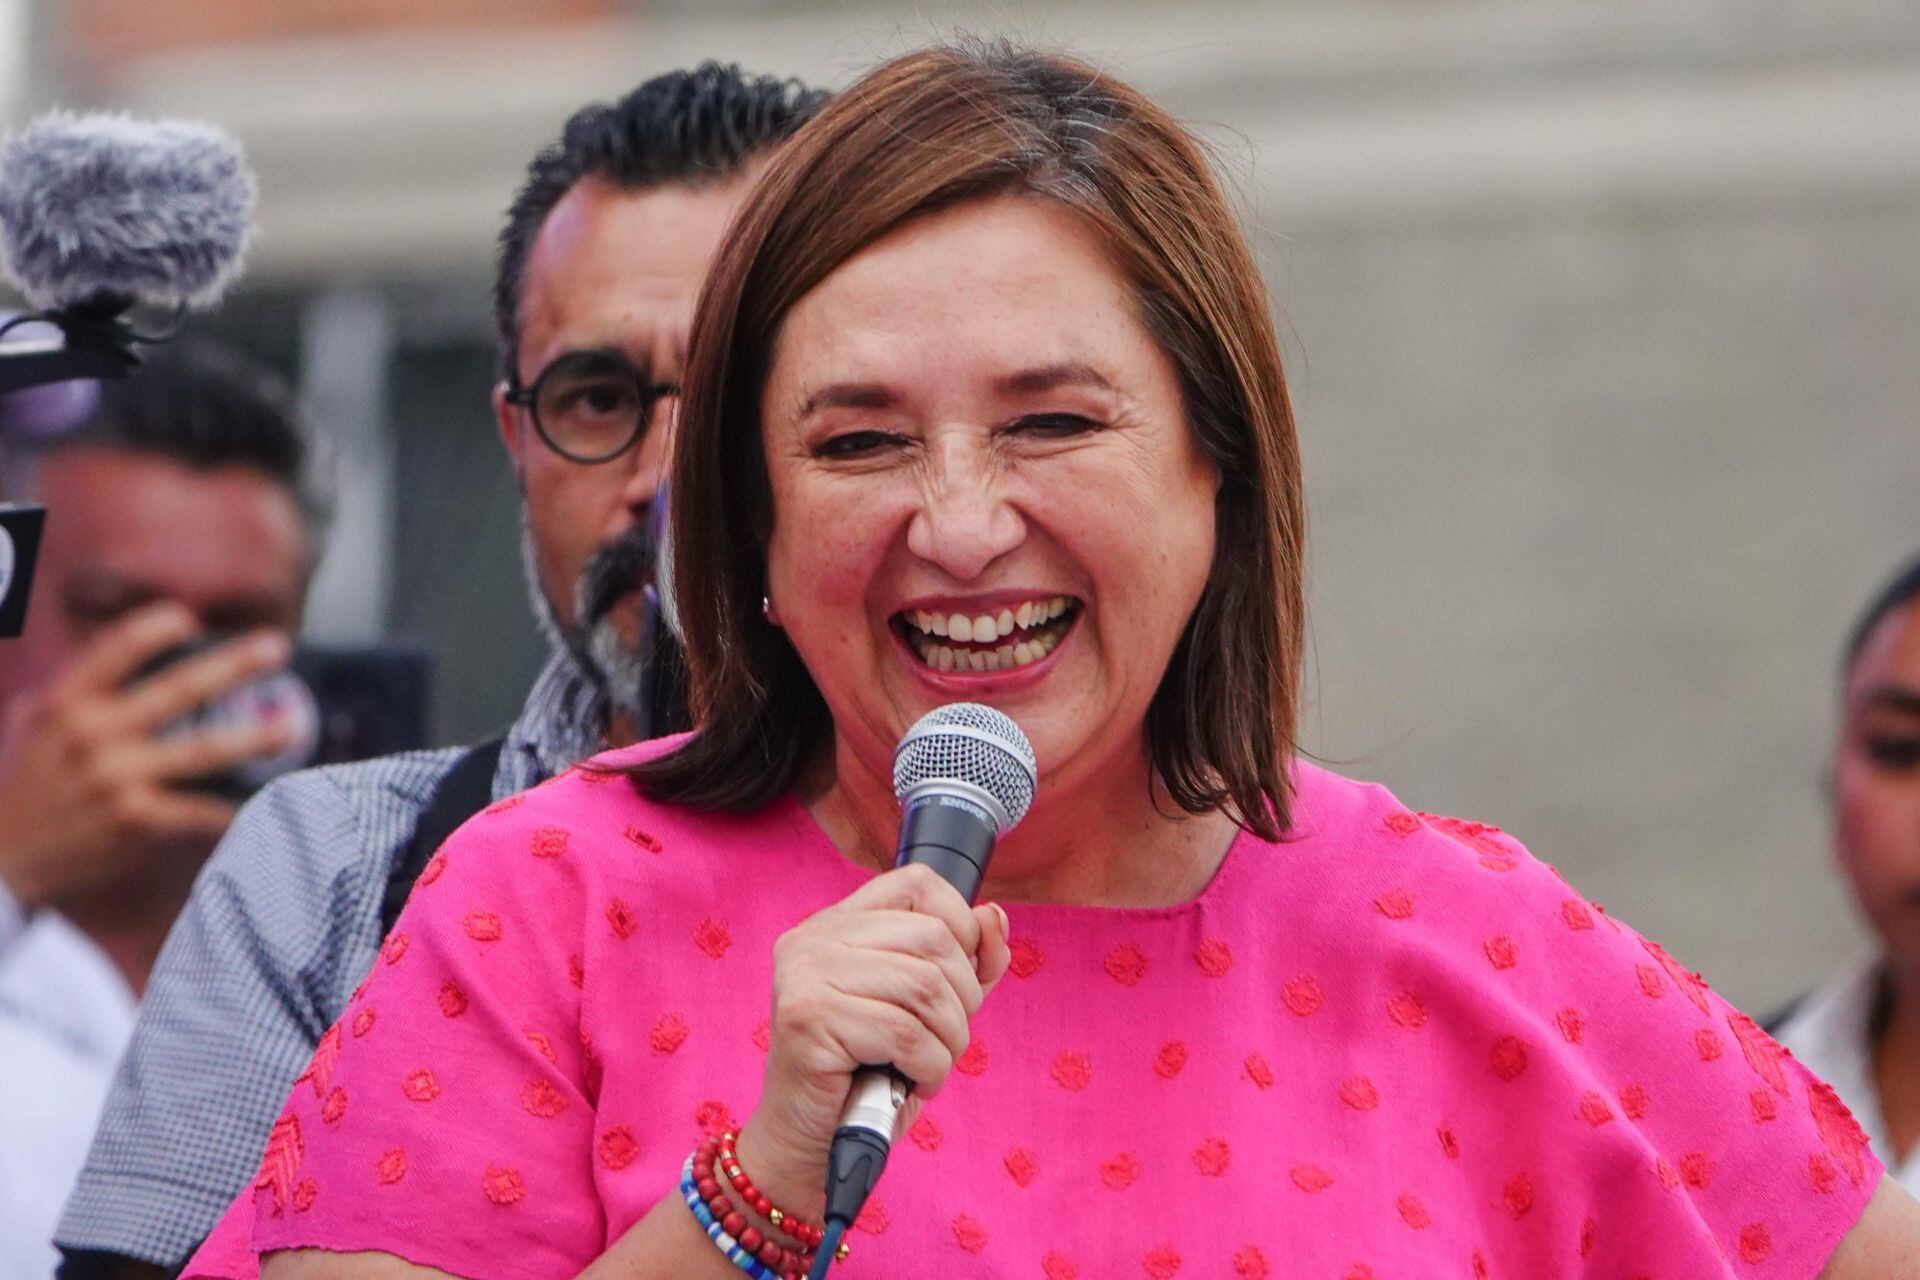 Xóchitl Gálvez, candidata a la presidencia